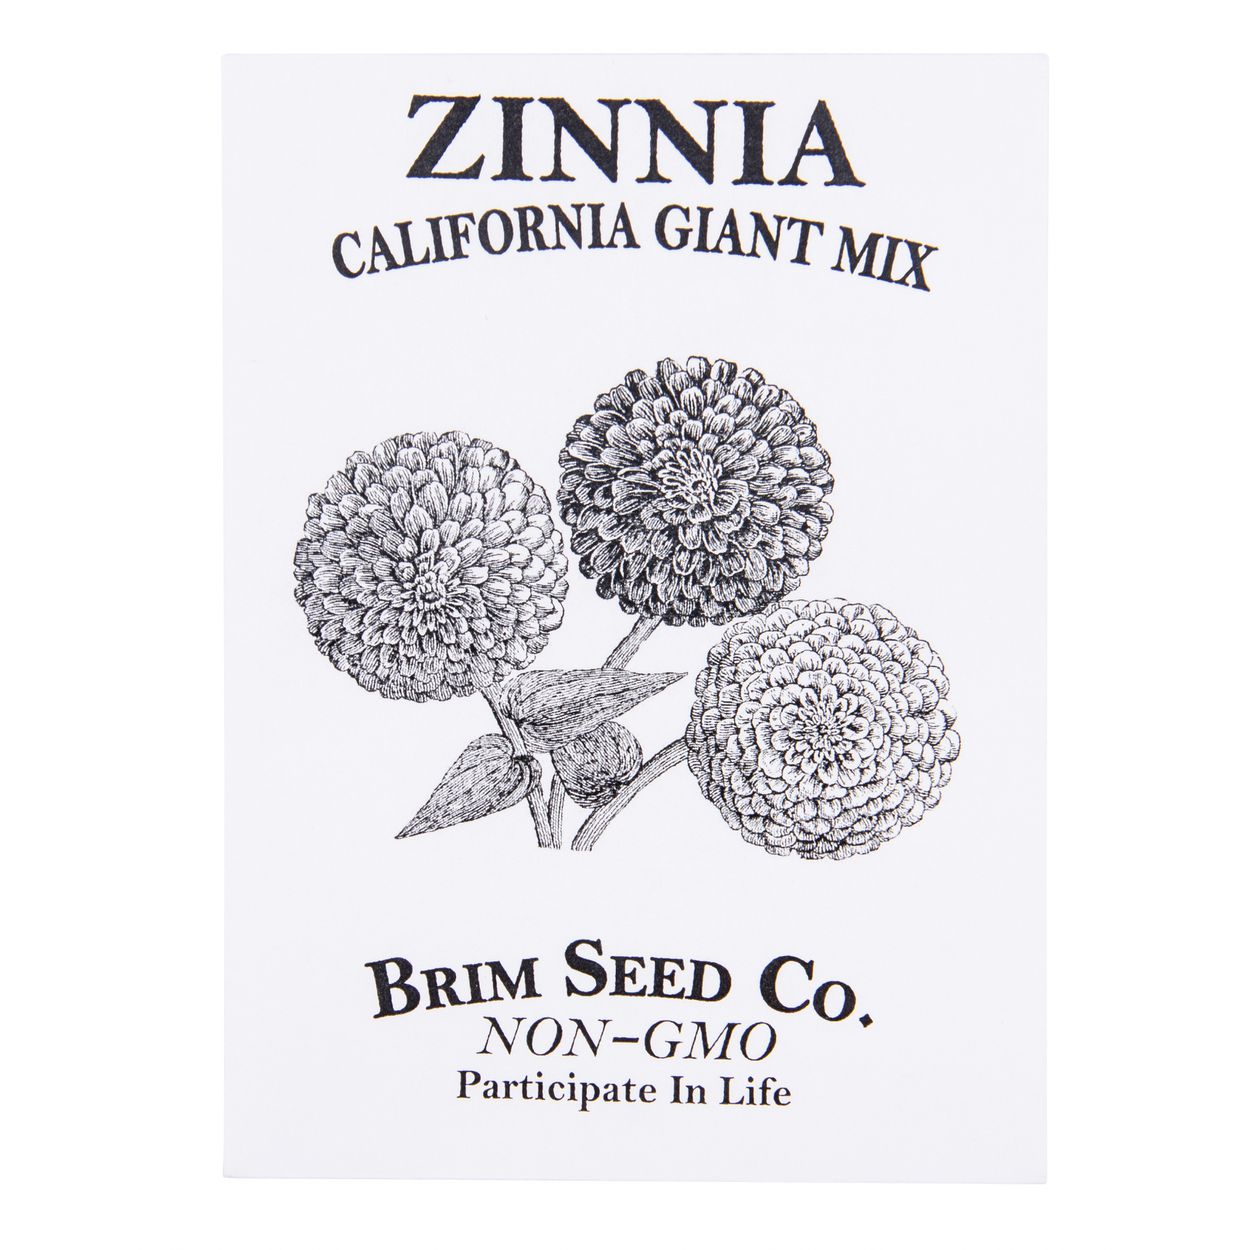 Brim Seed Co. - California Giant Mix Zinnia Flower Seed